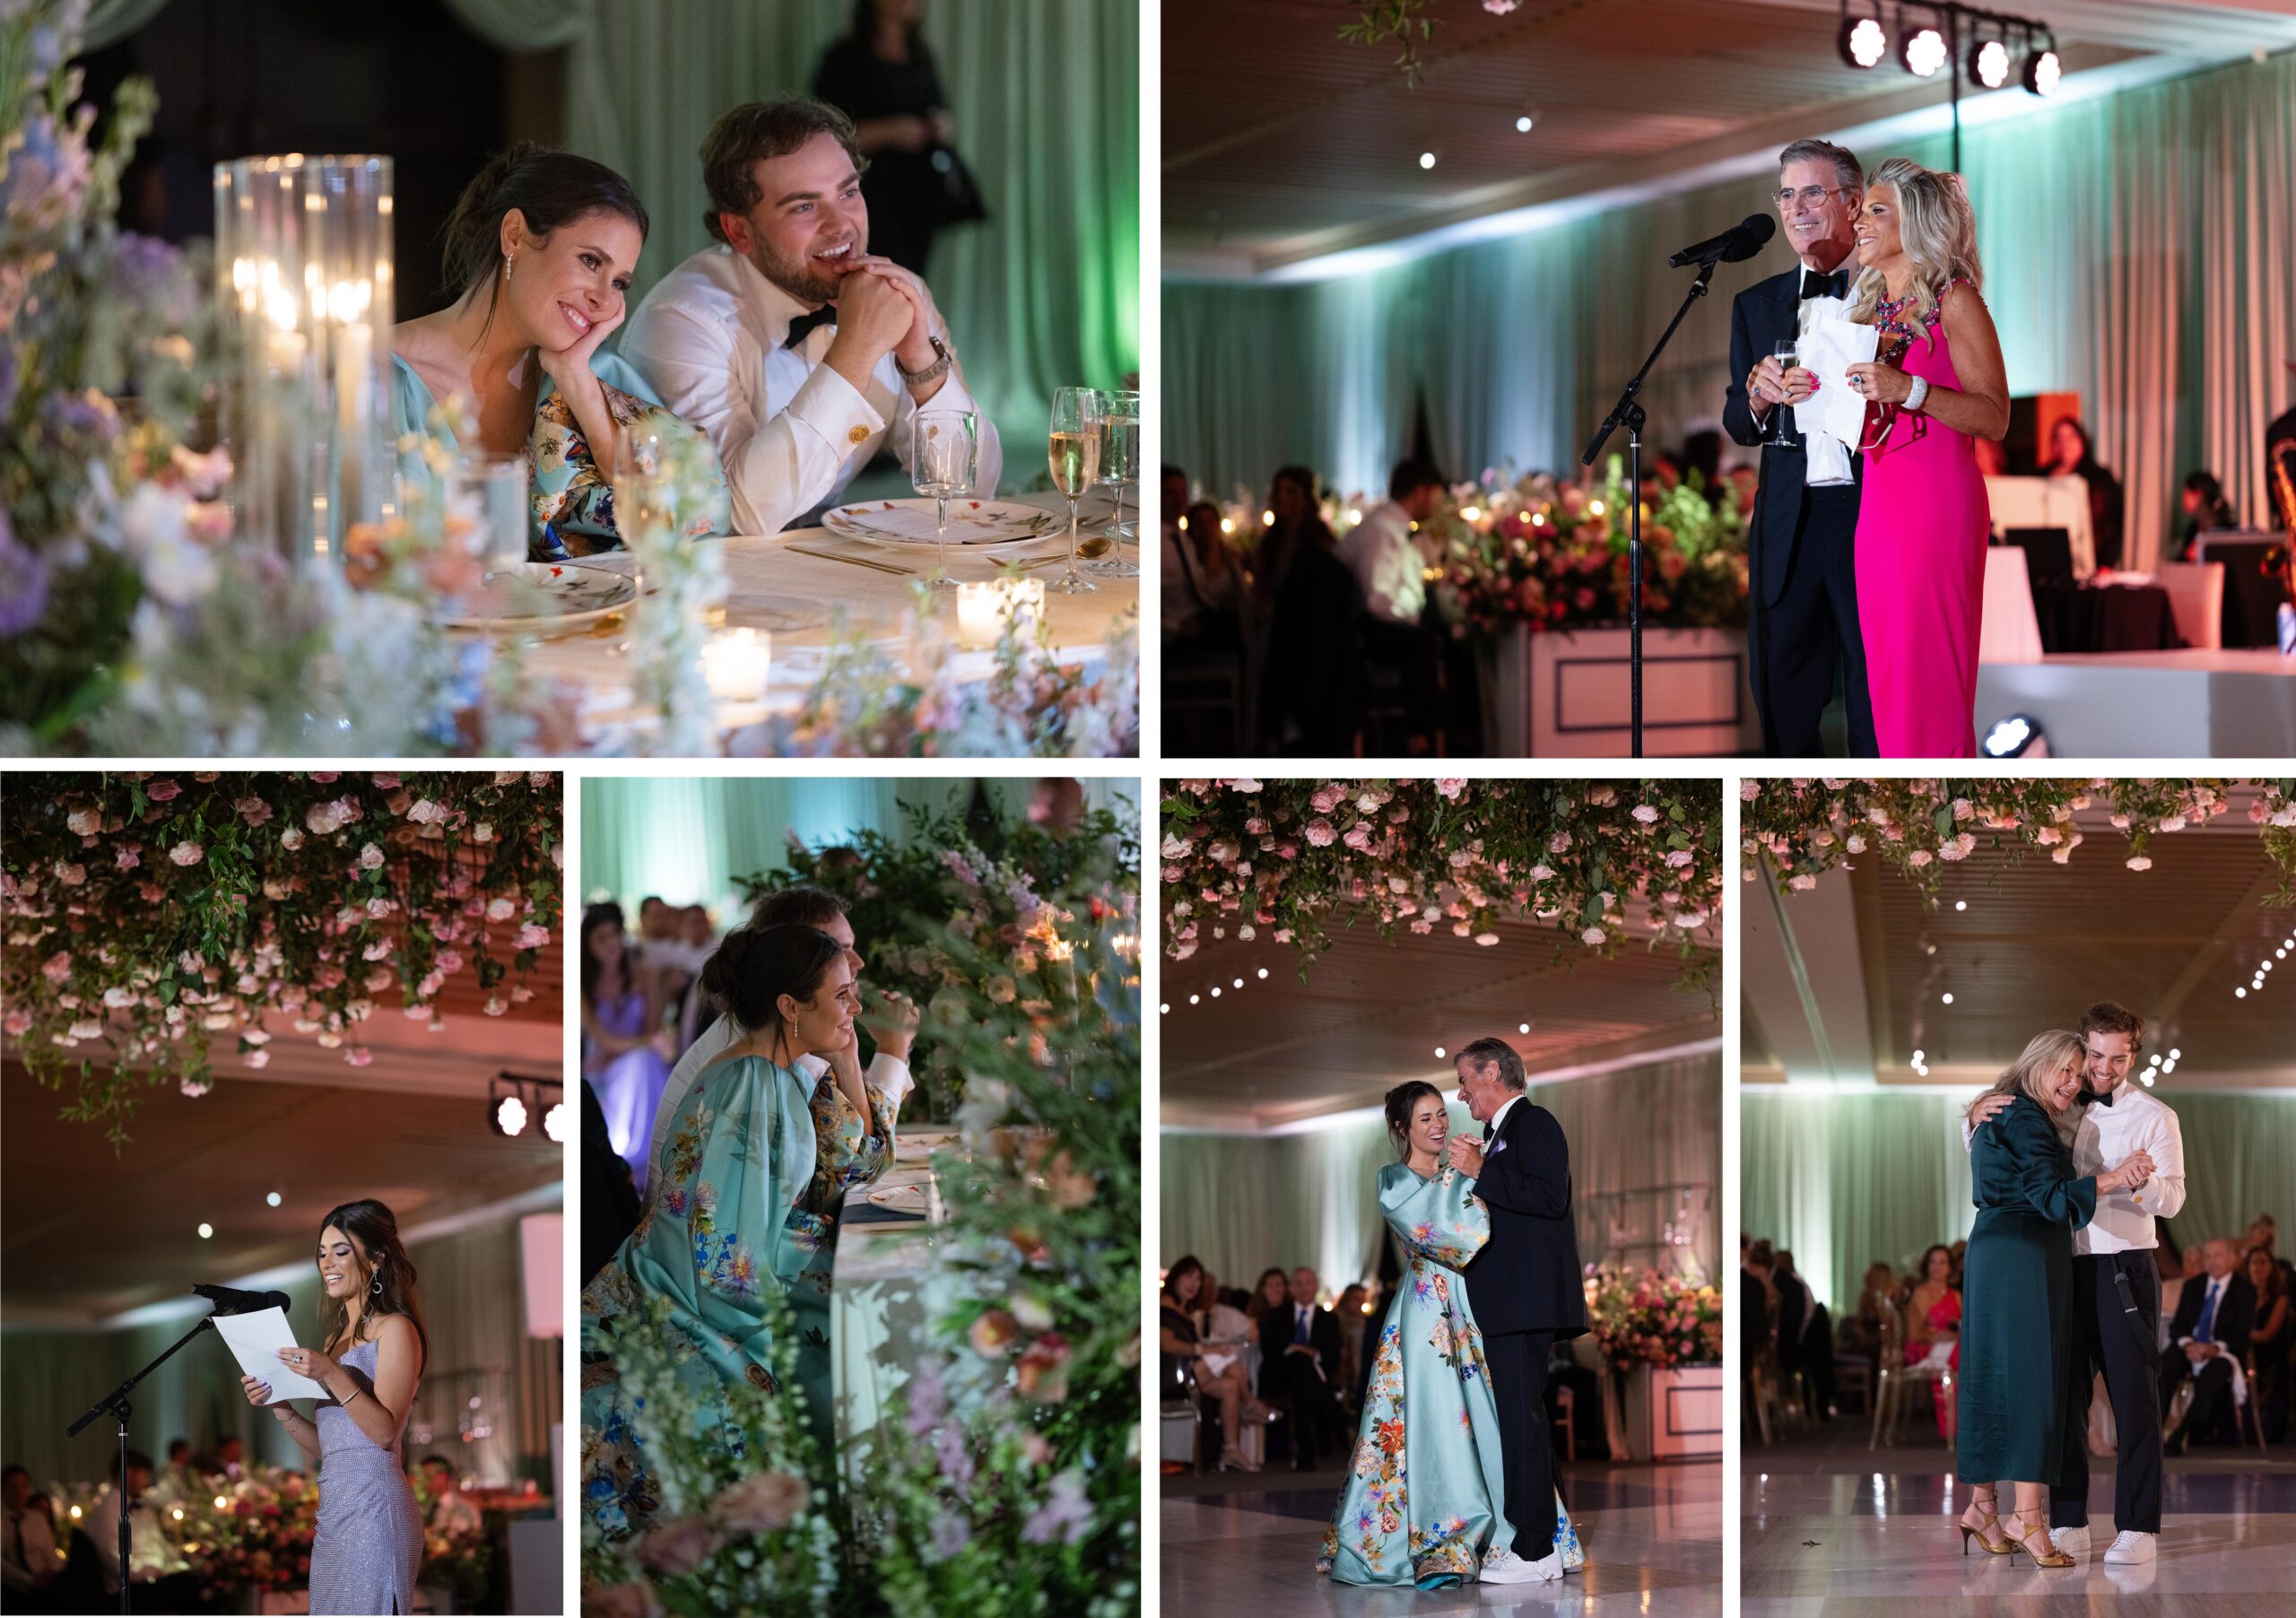 Speeches & Parent Dance (Images ref: Abby Hart Photo)